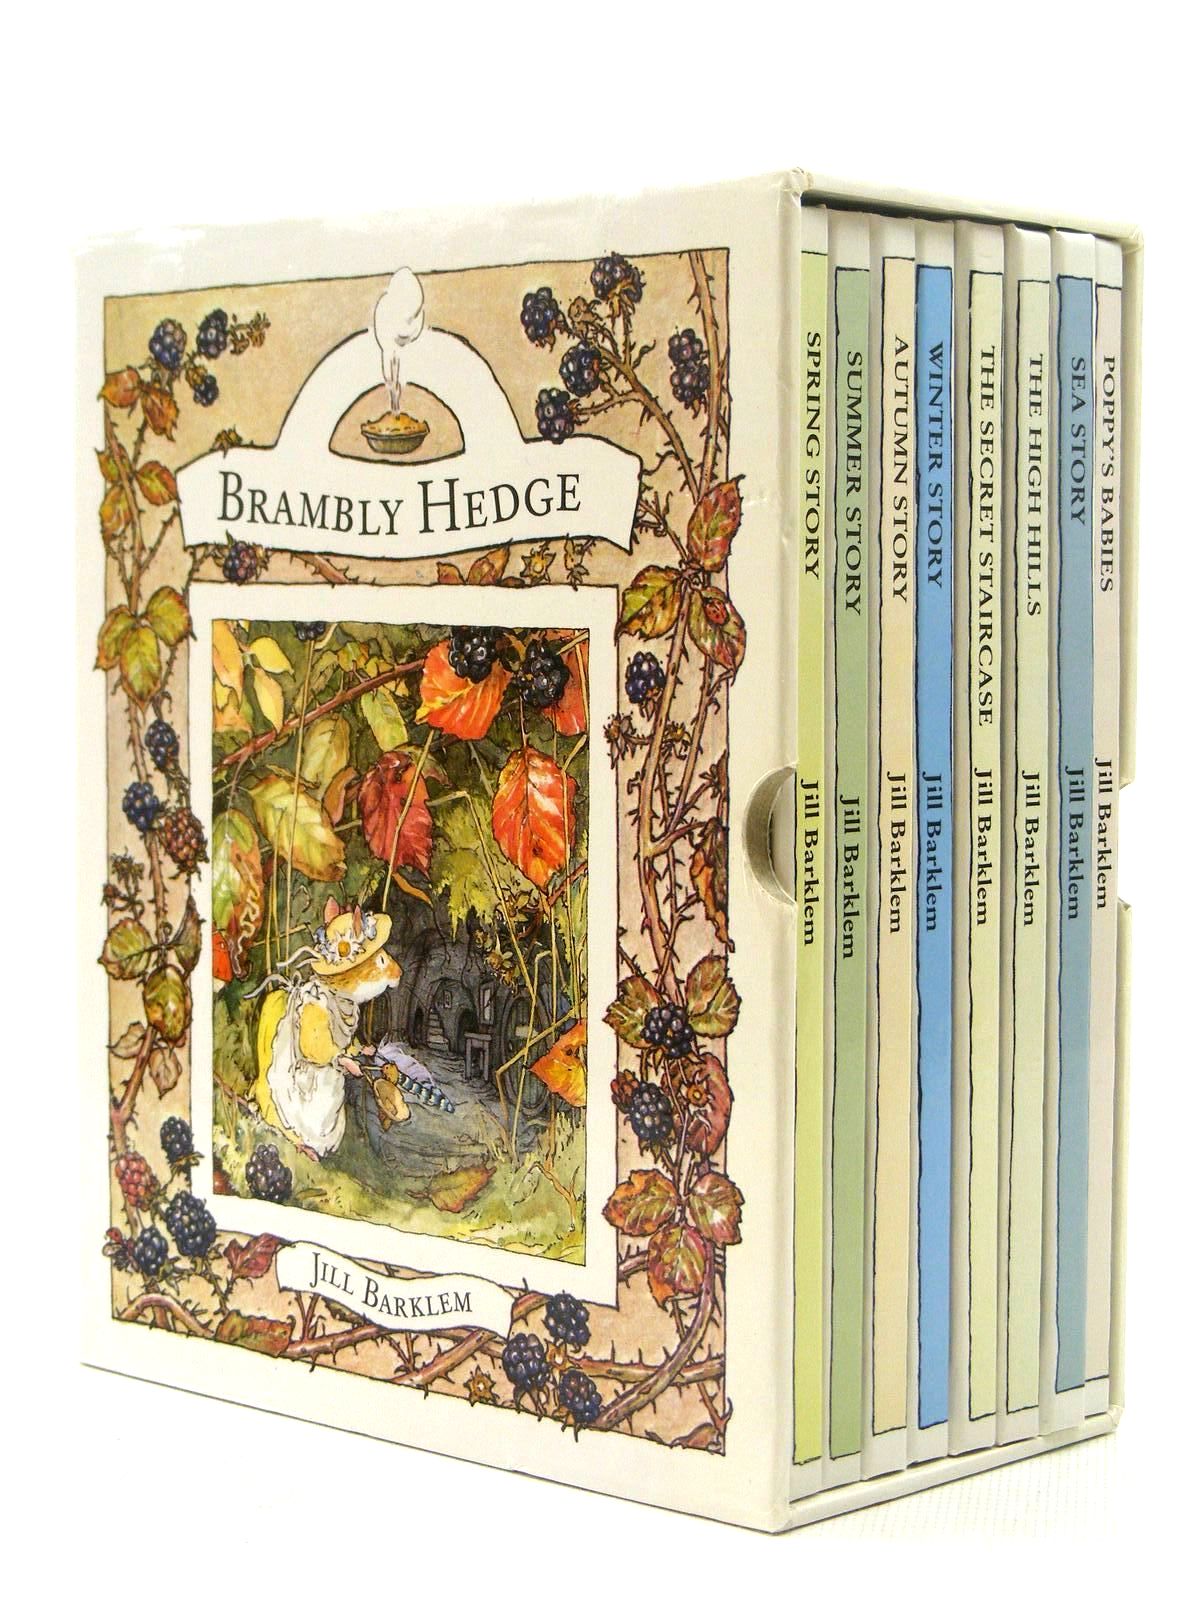 The Brambly Hedge Library: Barklem, Jill.: 9780007610167: Books 